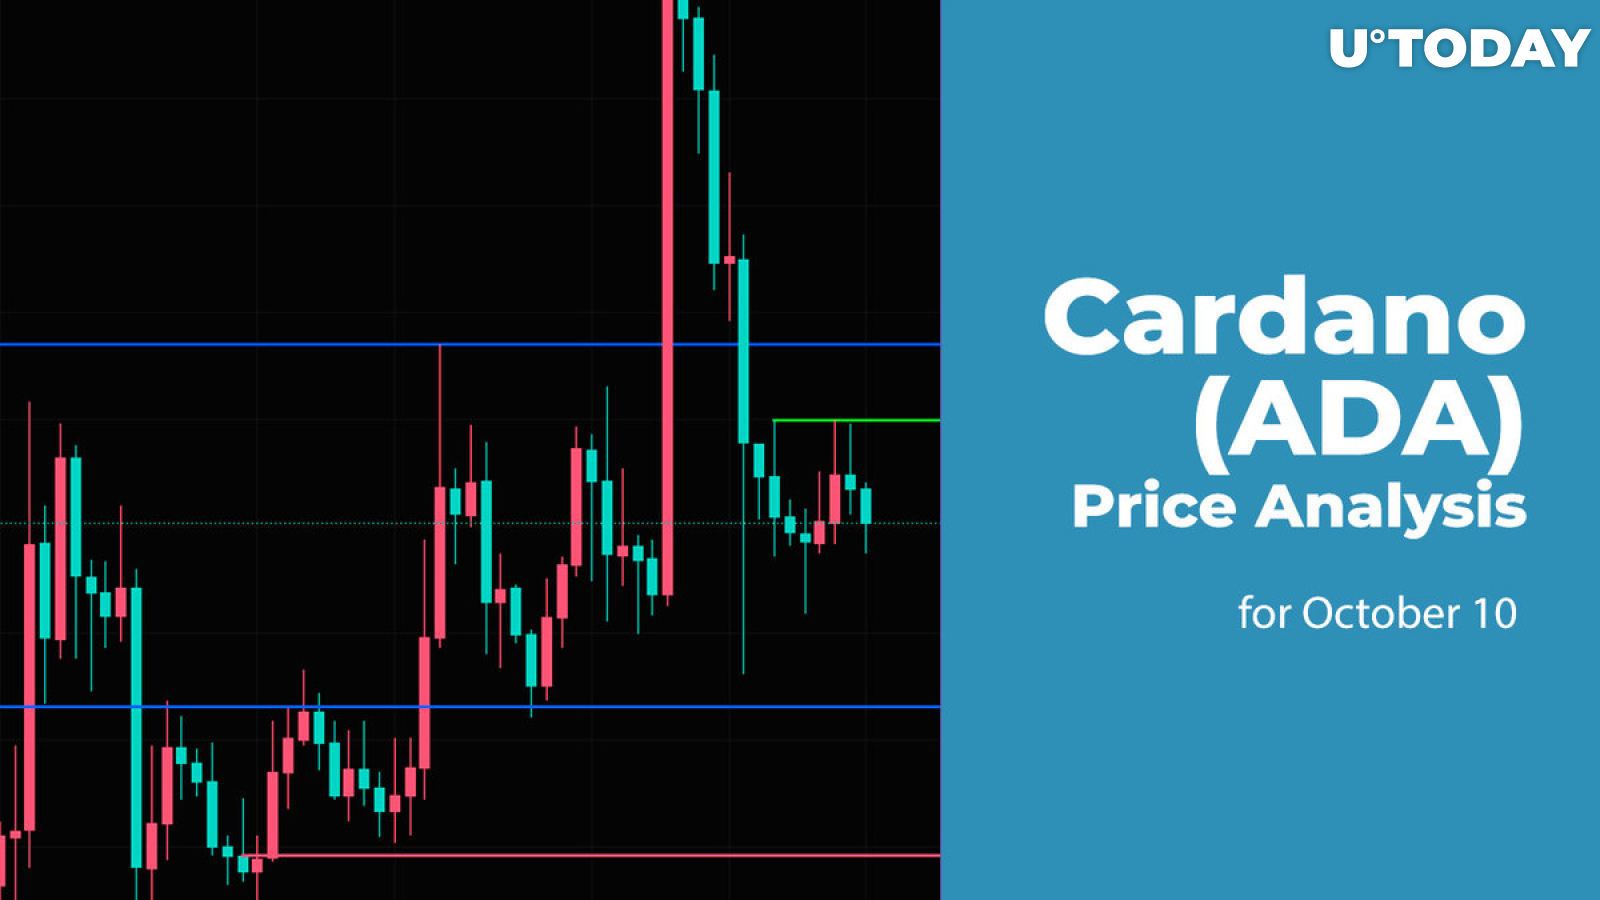 Cardano (ADA) Price Analysis for October 10